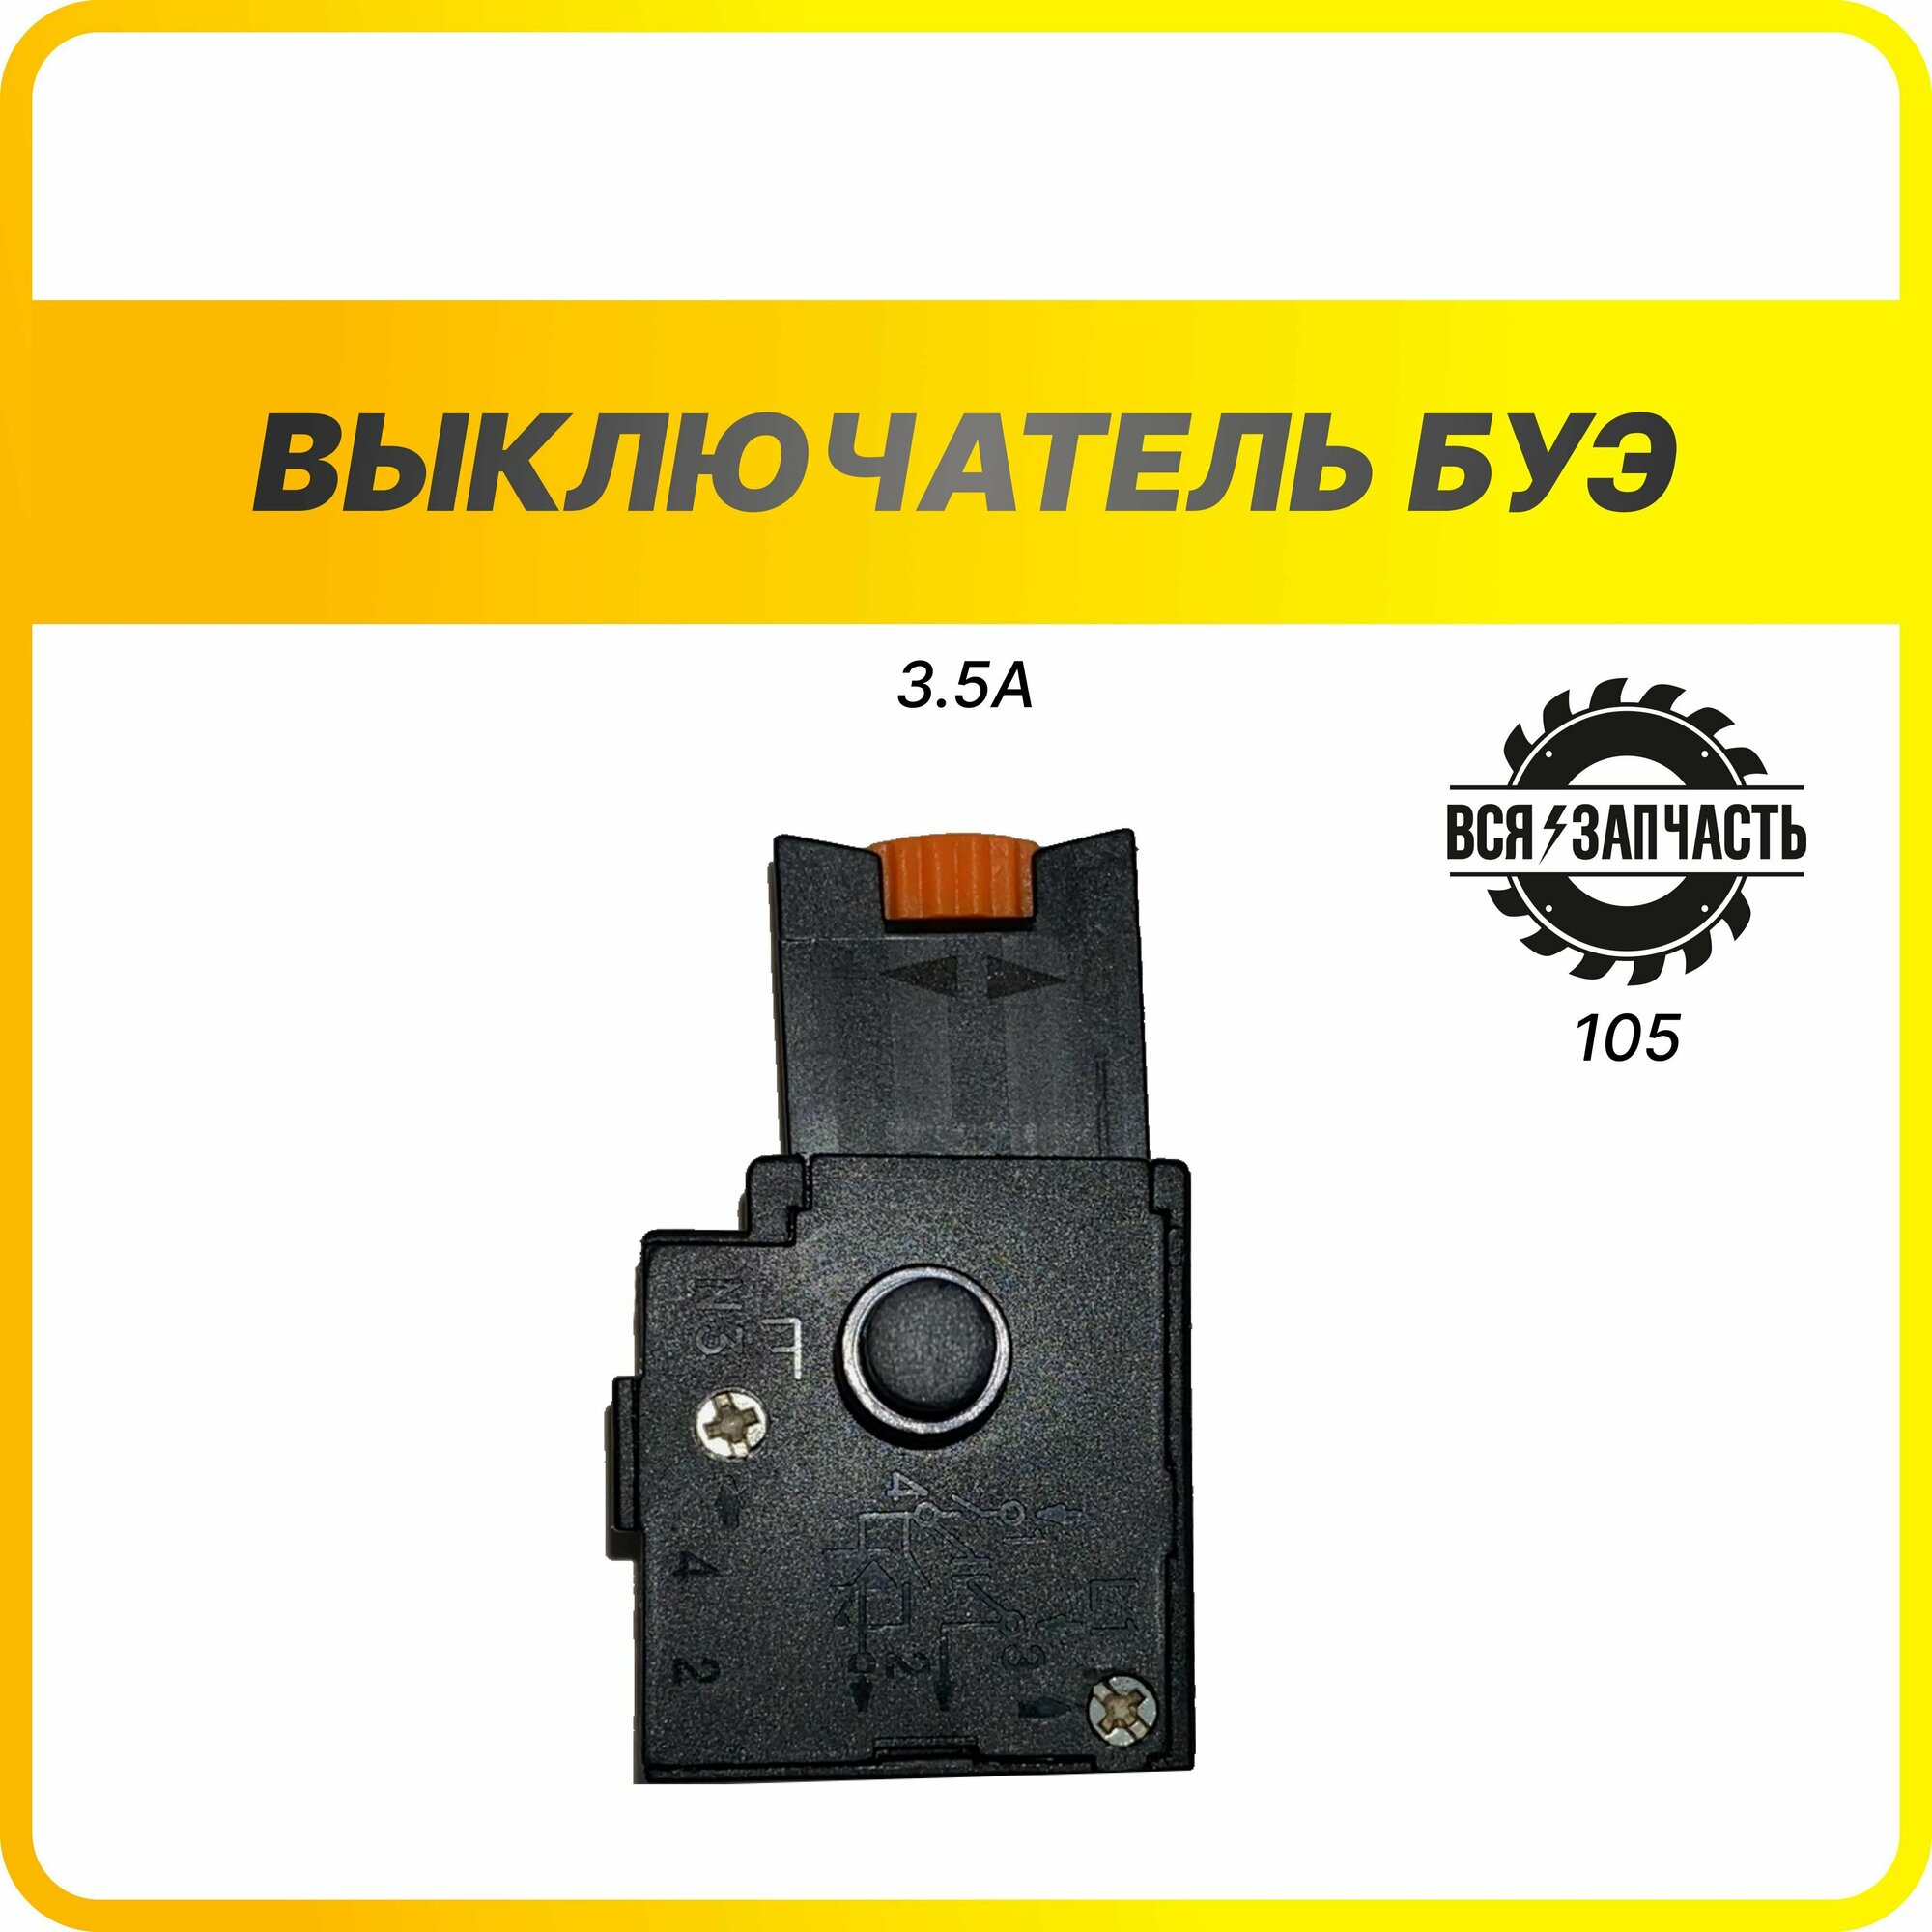 Выключатель (кнопка) БУЭ мод. 03 3,5А (МЭС 300), (105VZ)